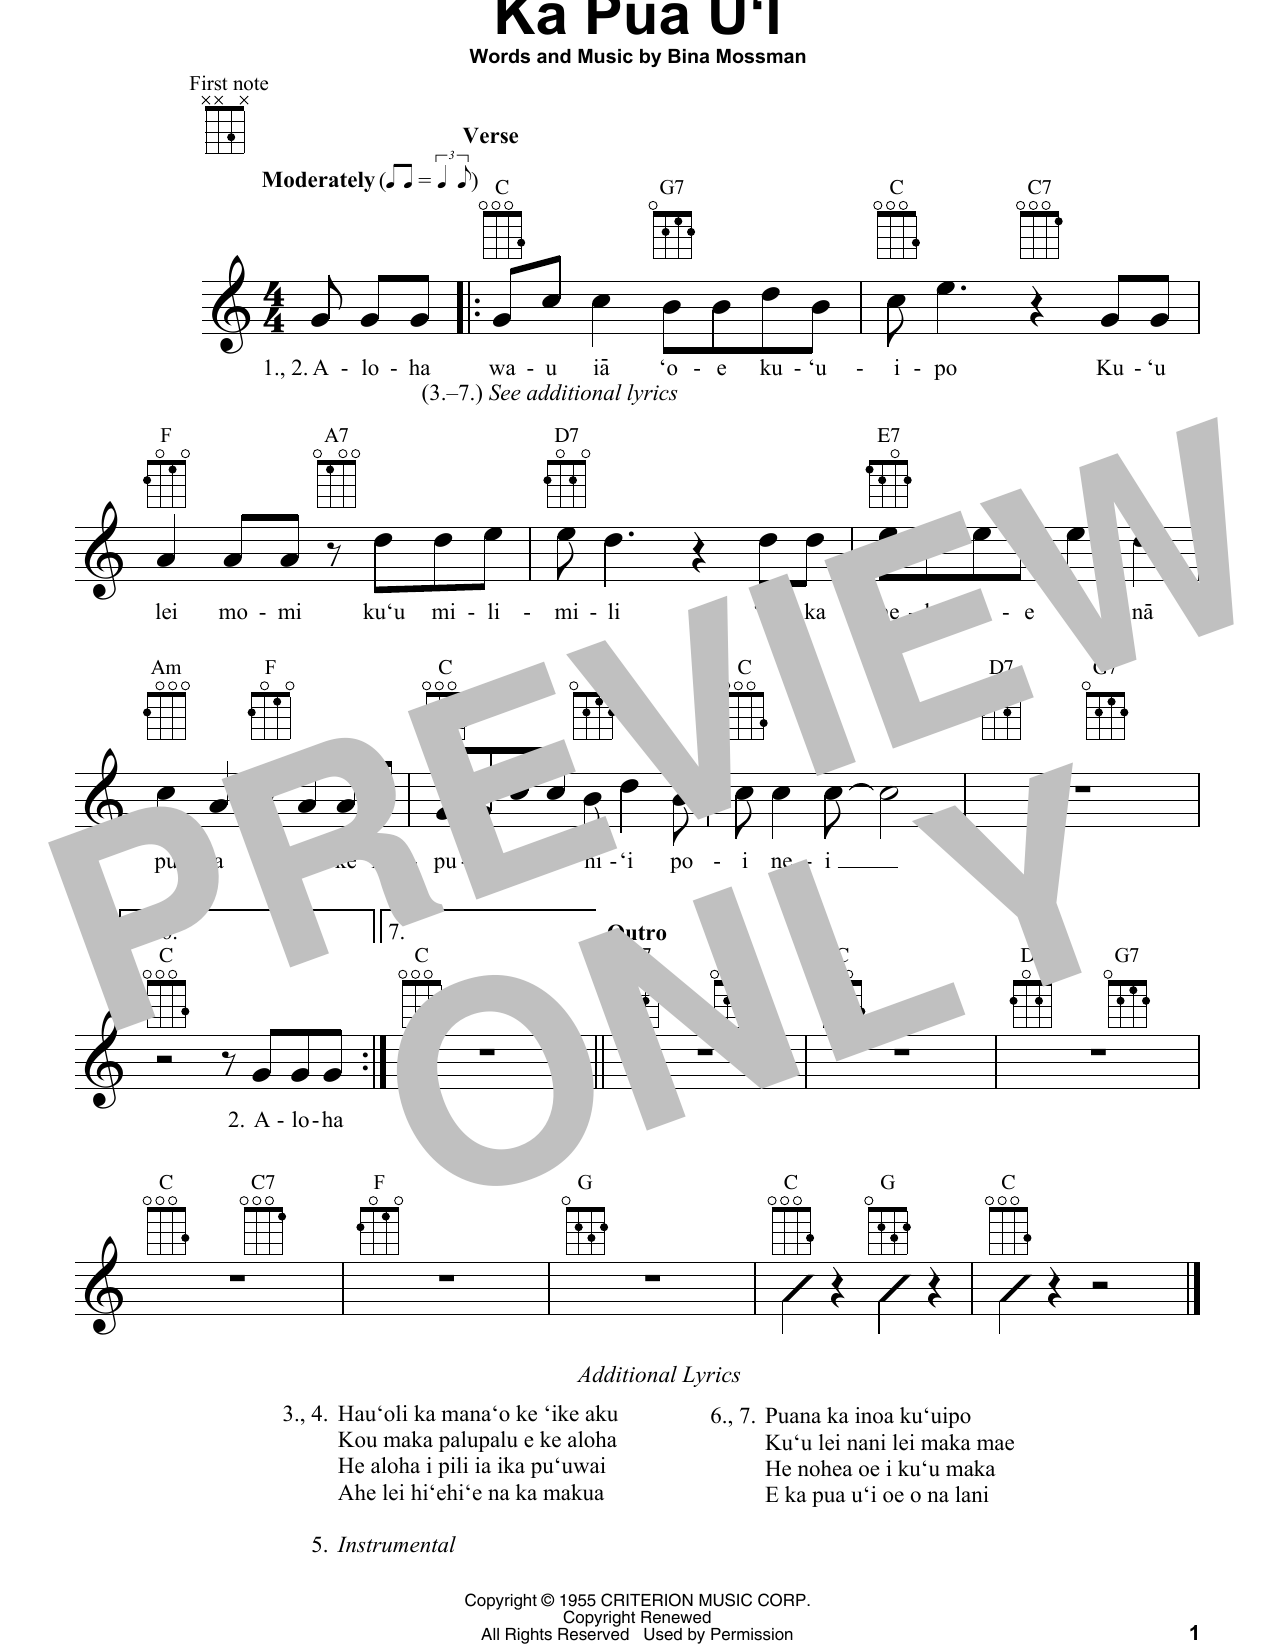 Bina Mossman Ka Pua U'I Sheet Music Notes & Chords for Ukulele - Download or Print PDF